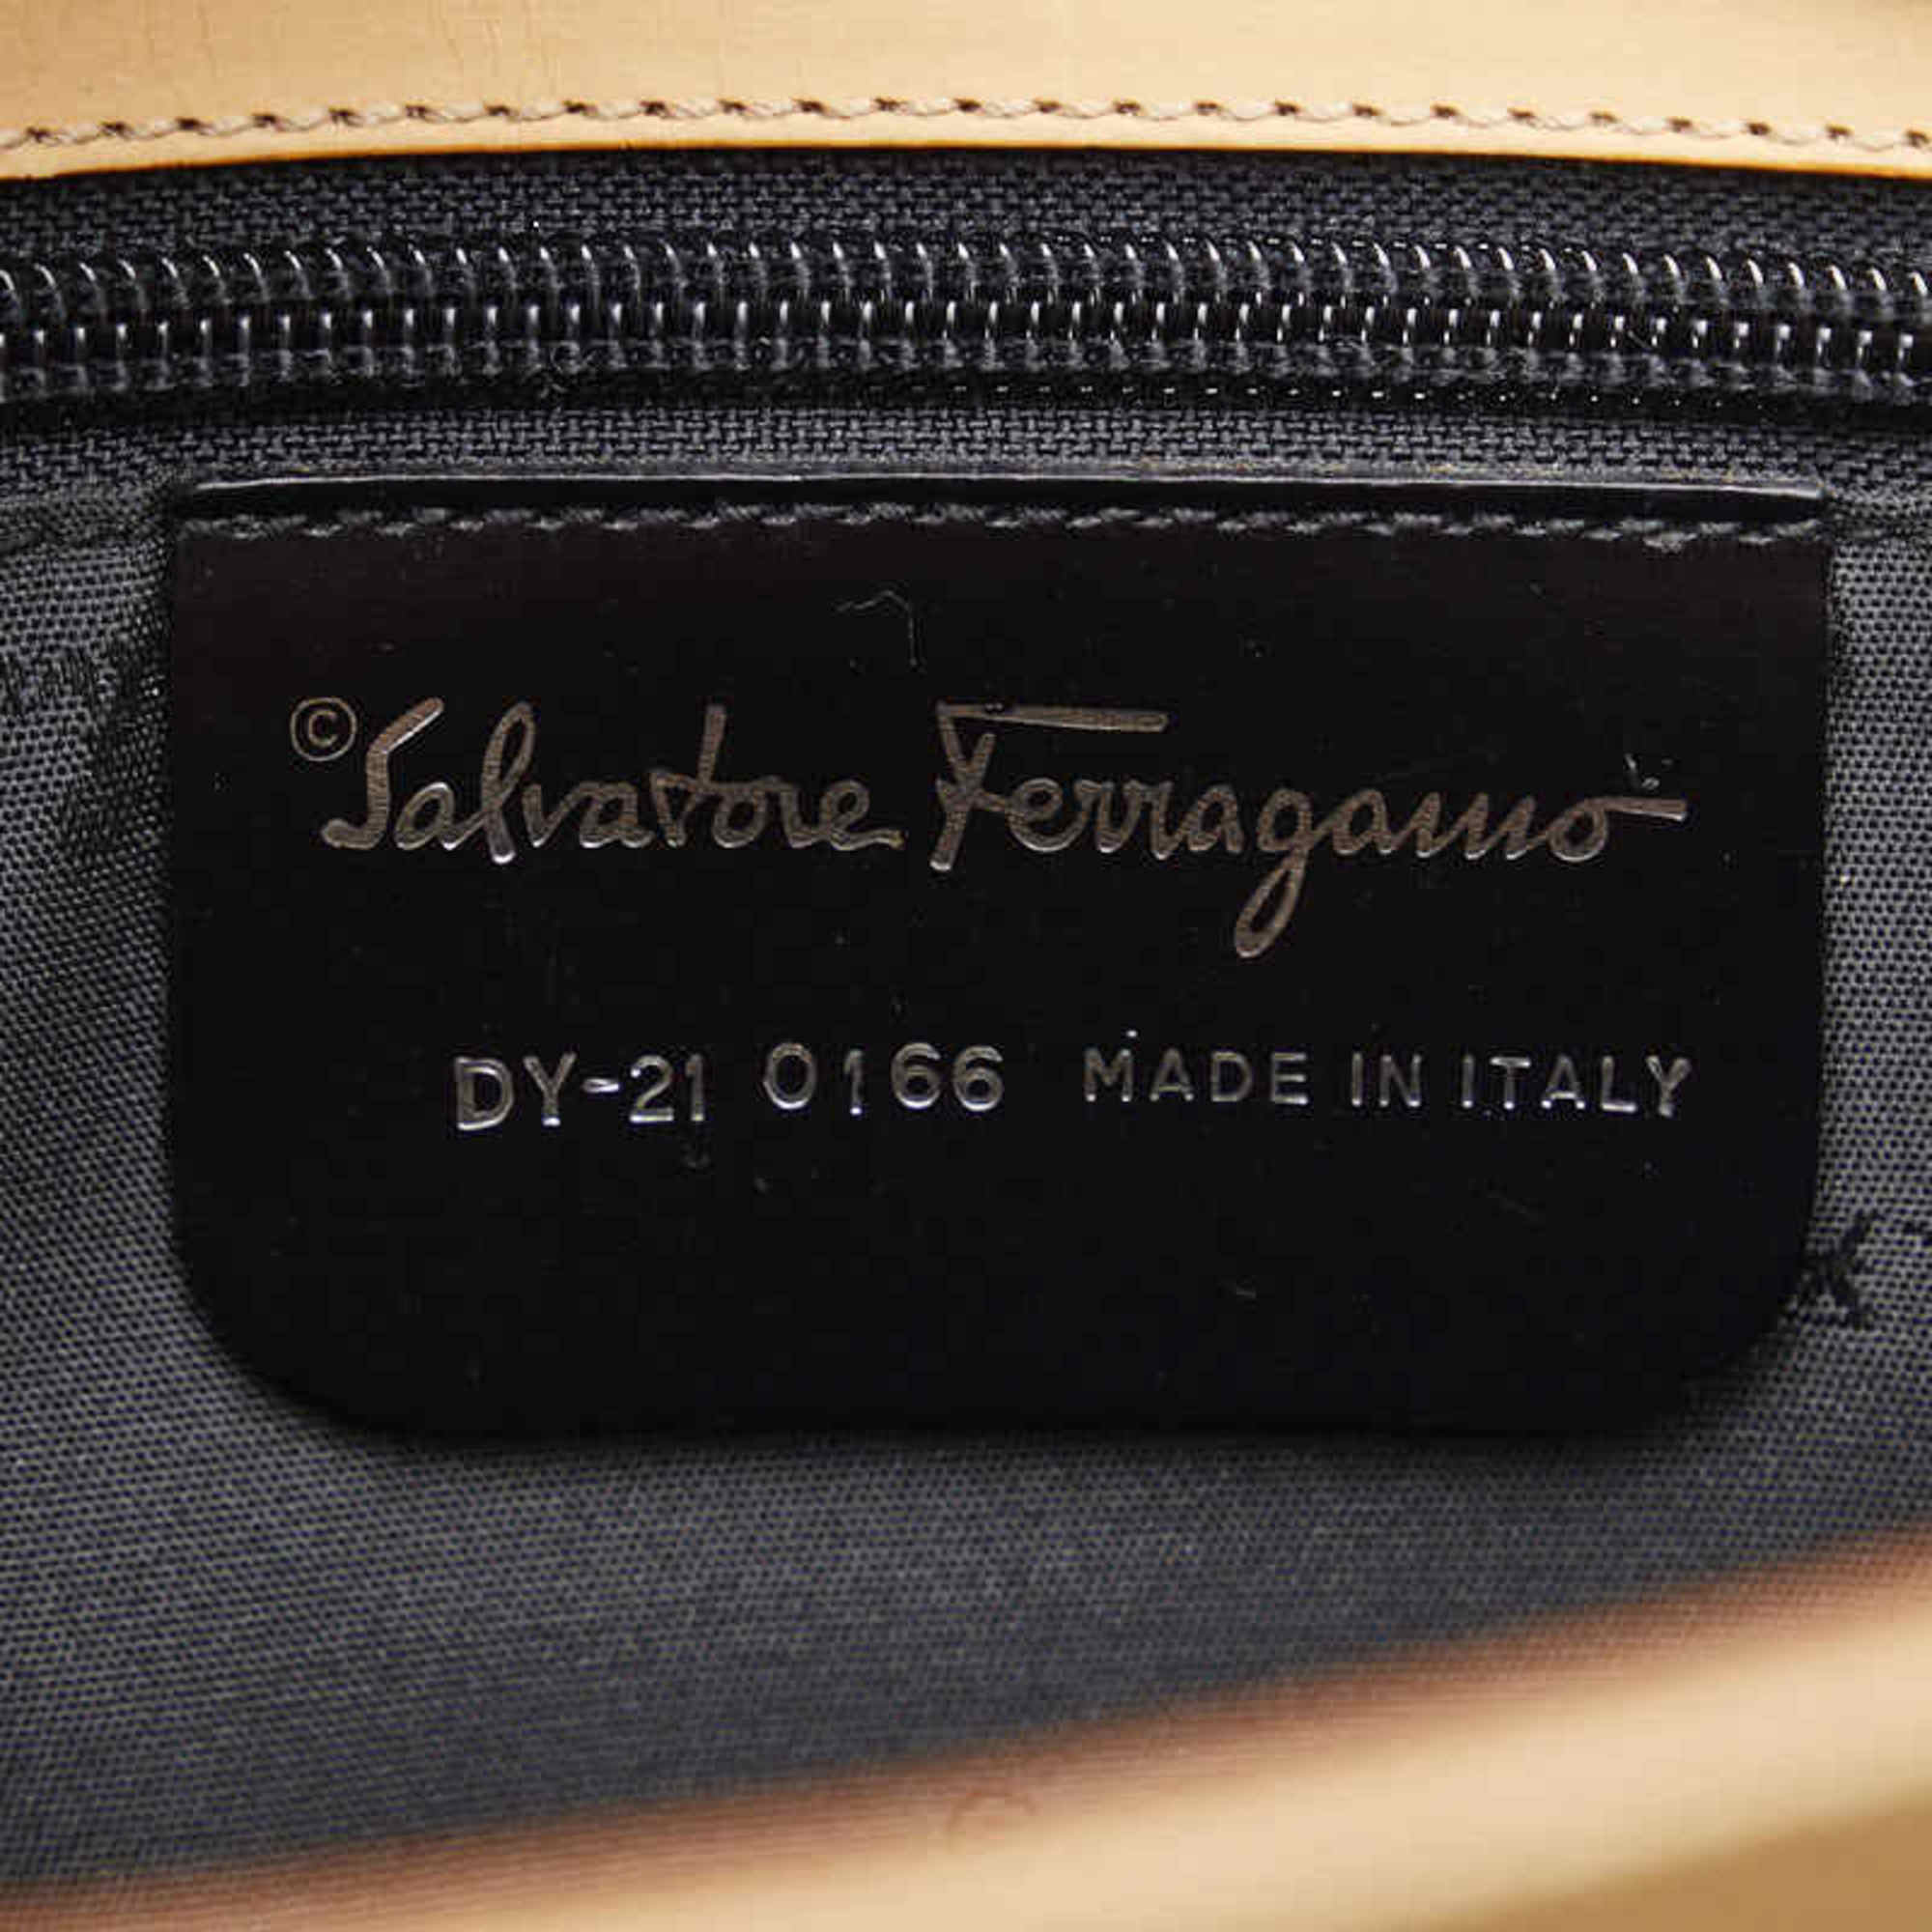 Salvatore Ferragamo Gancini Handbag Shoulder Bag Brown Natural Leather Women's